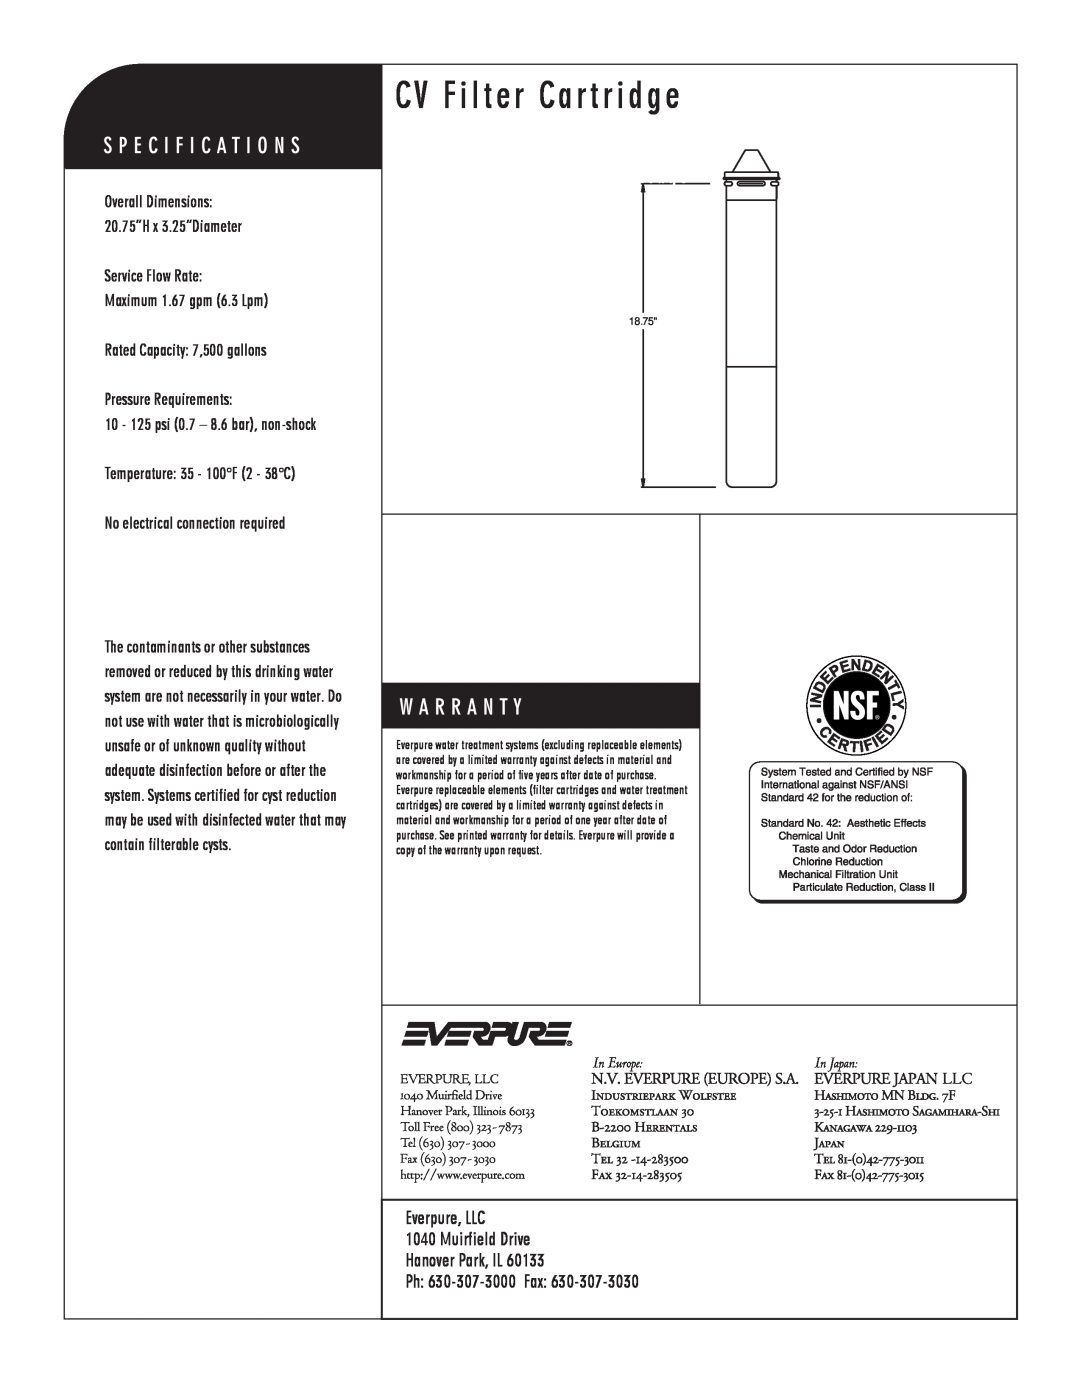 Everpure EV9625-01 manual CV Filter Cartridge, CV Replacement Cartridge, Service Flow Rate Maximum 1.67 gpm 6.3 Lpm 